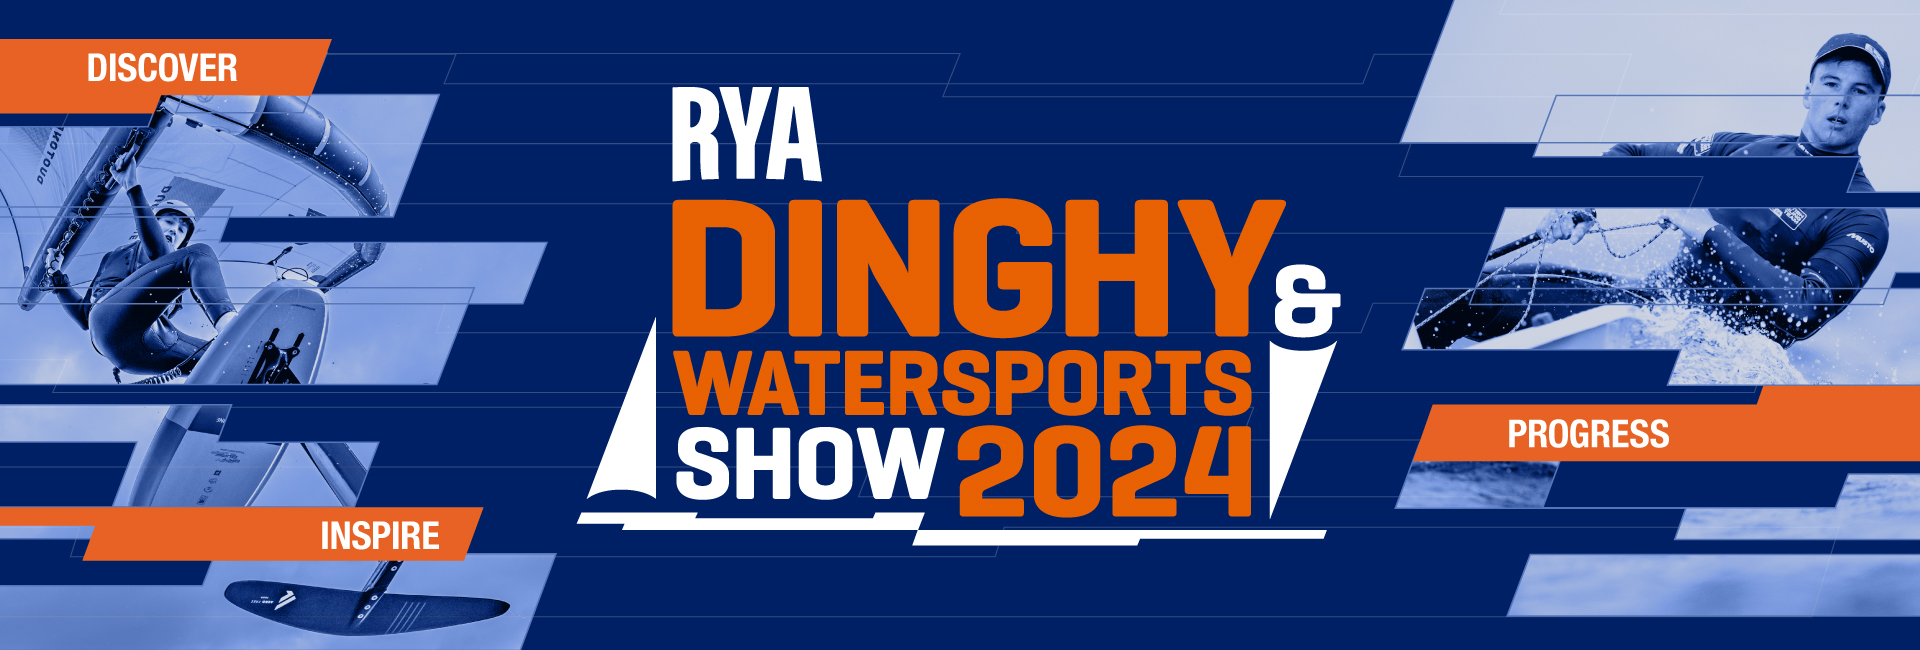 RYA dinghy show 2023